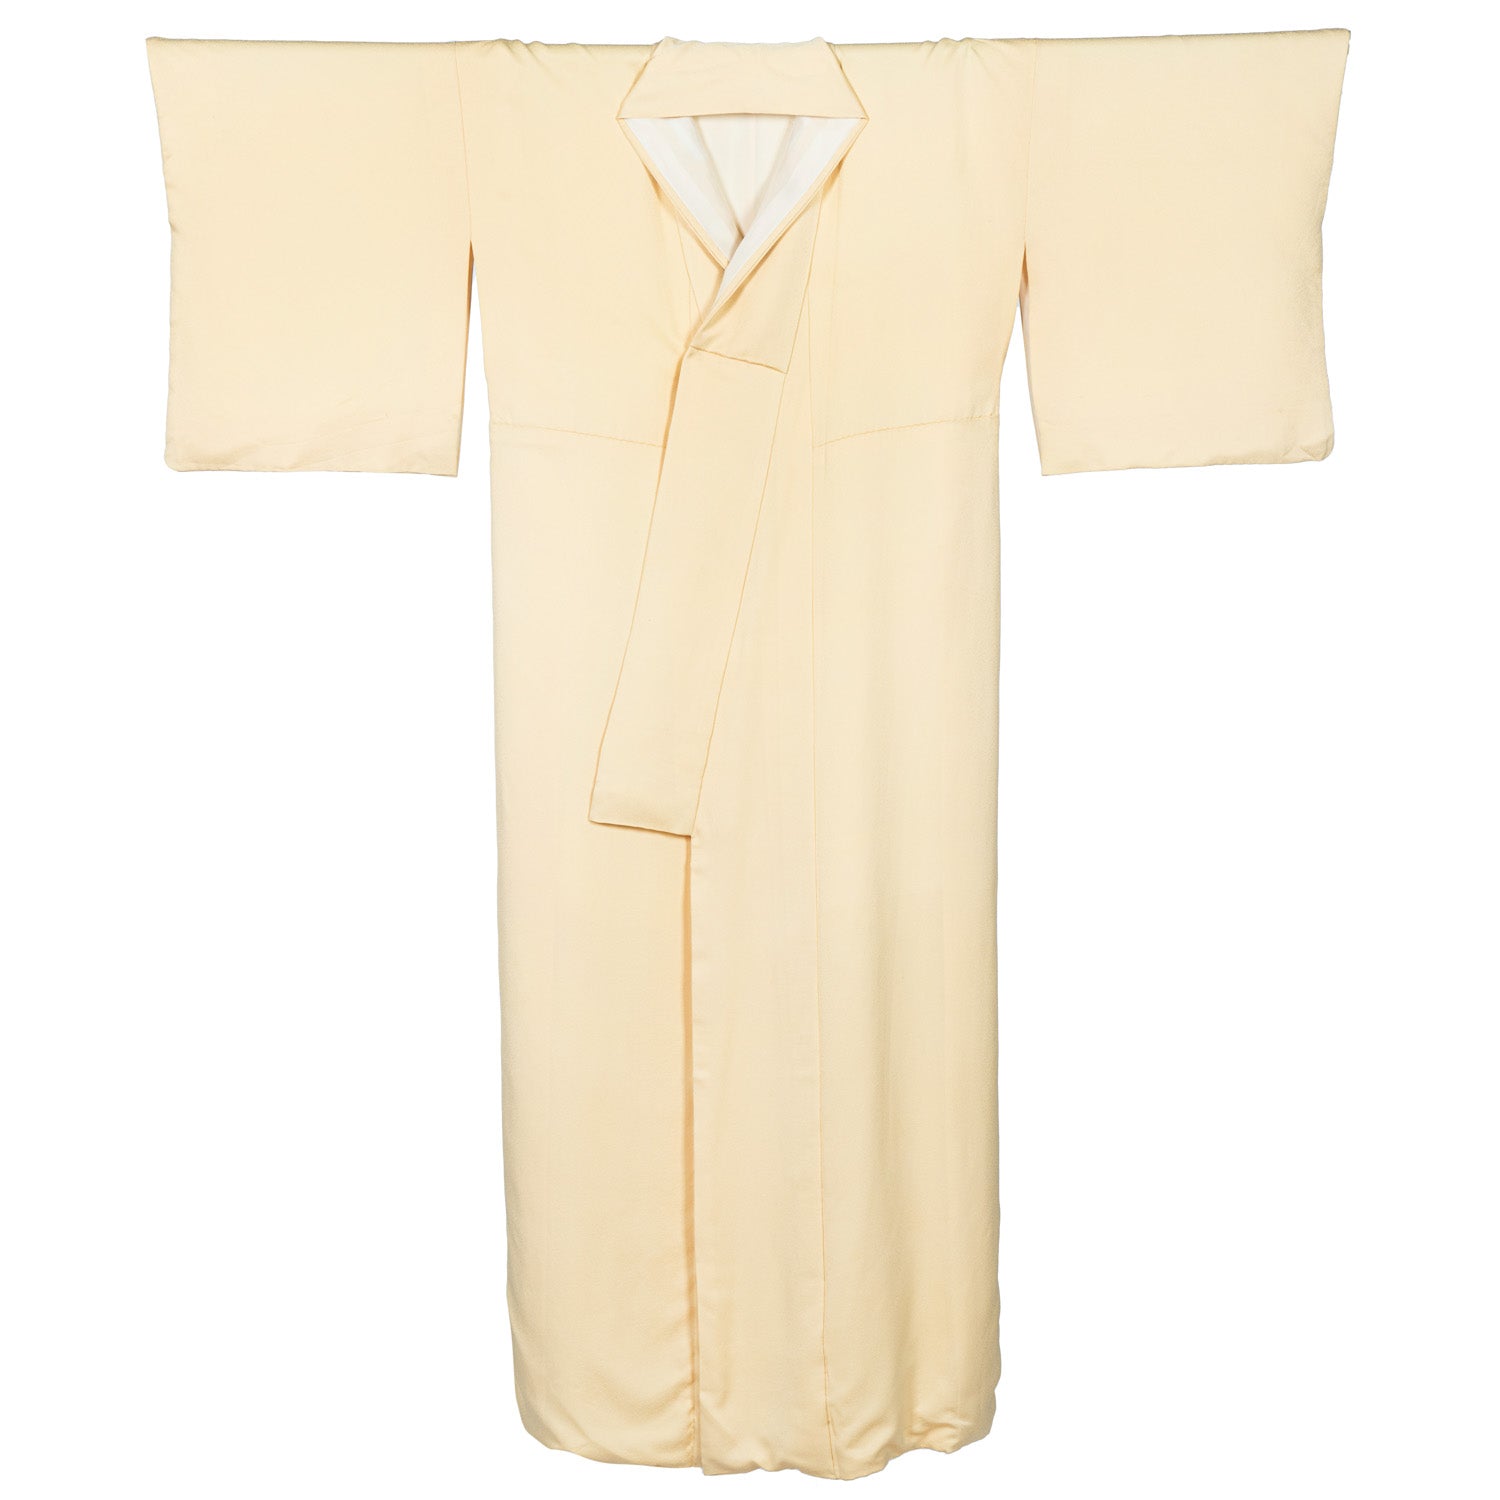 Shinano Japanese Silk Vintage Kimono Robe